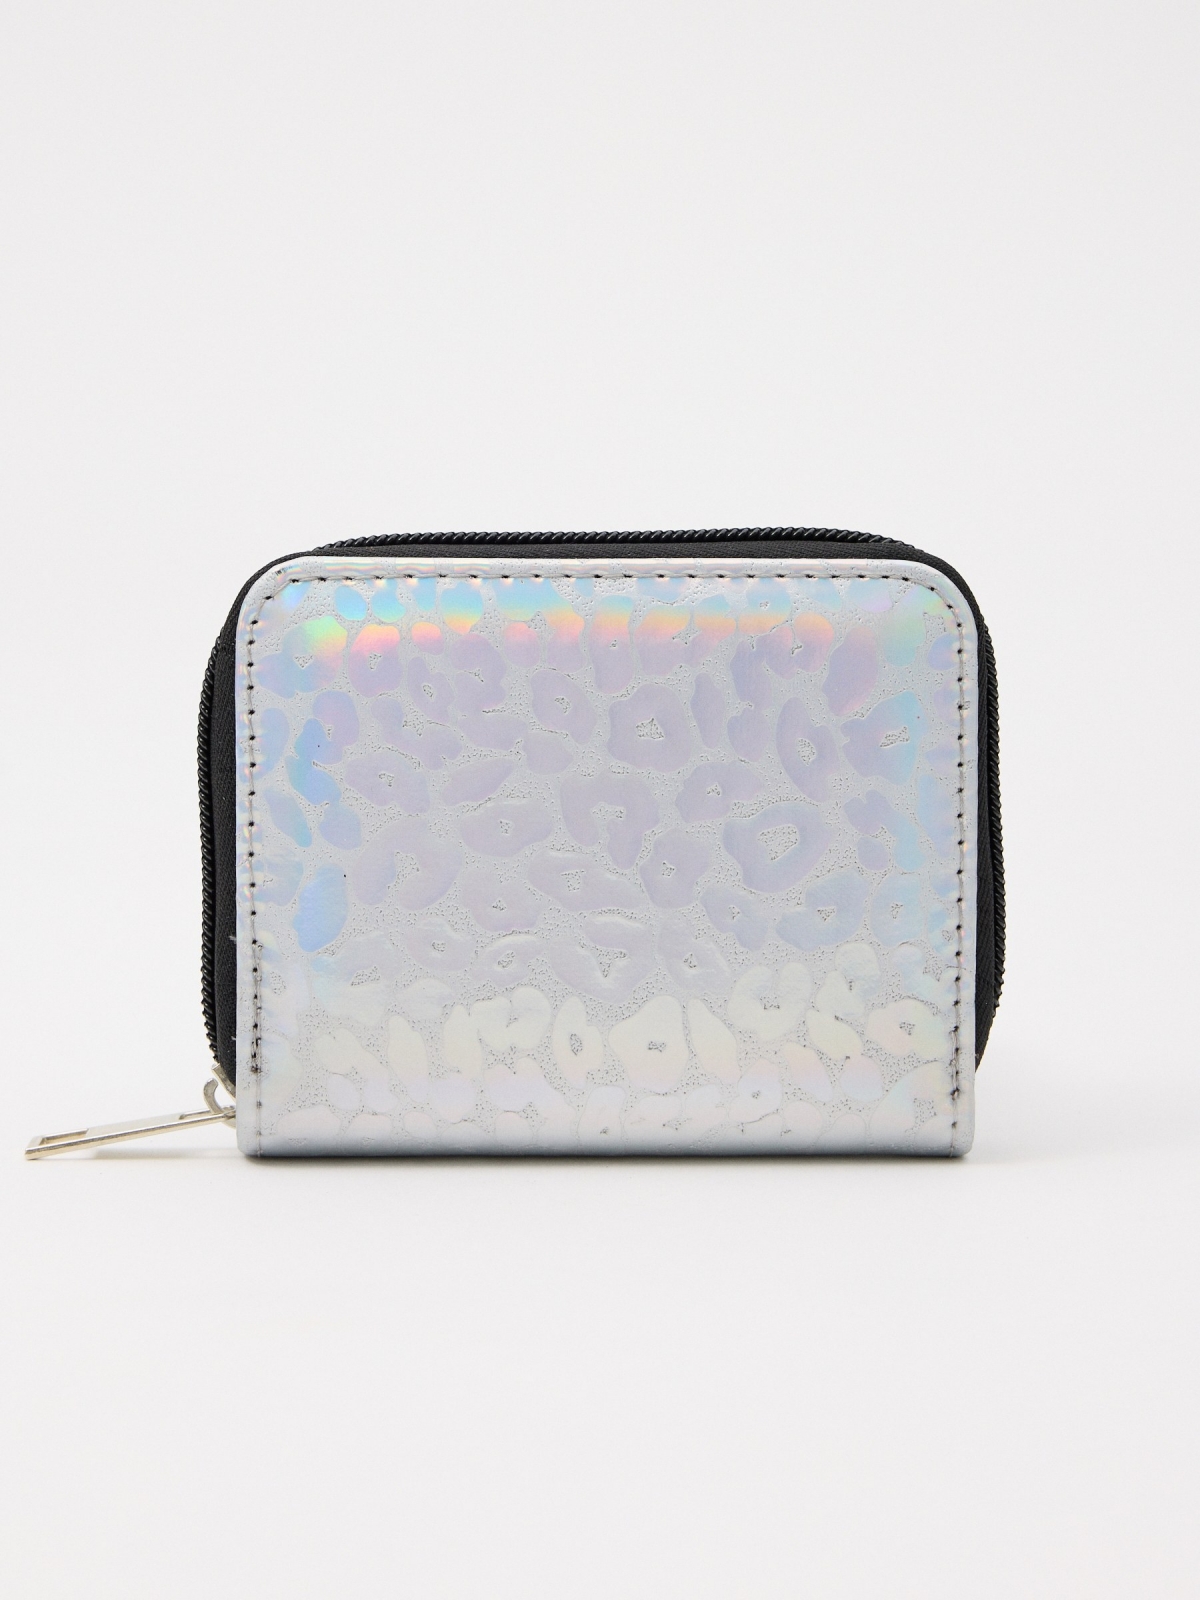 Silver leatherette wallet multicolor